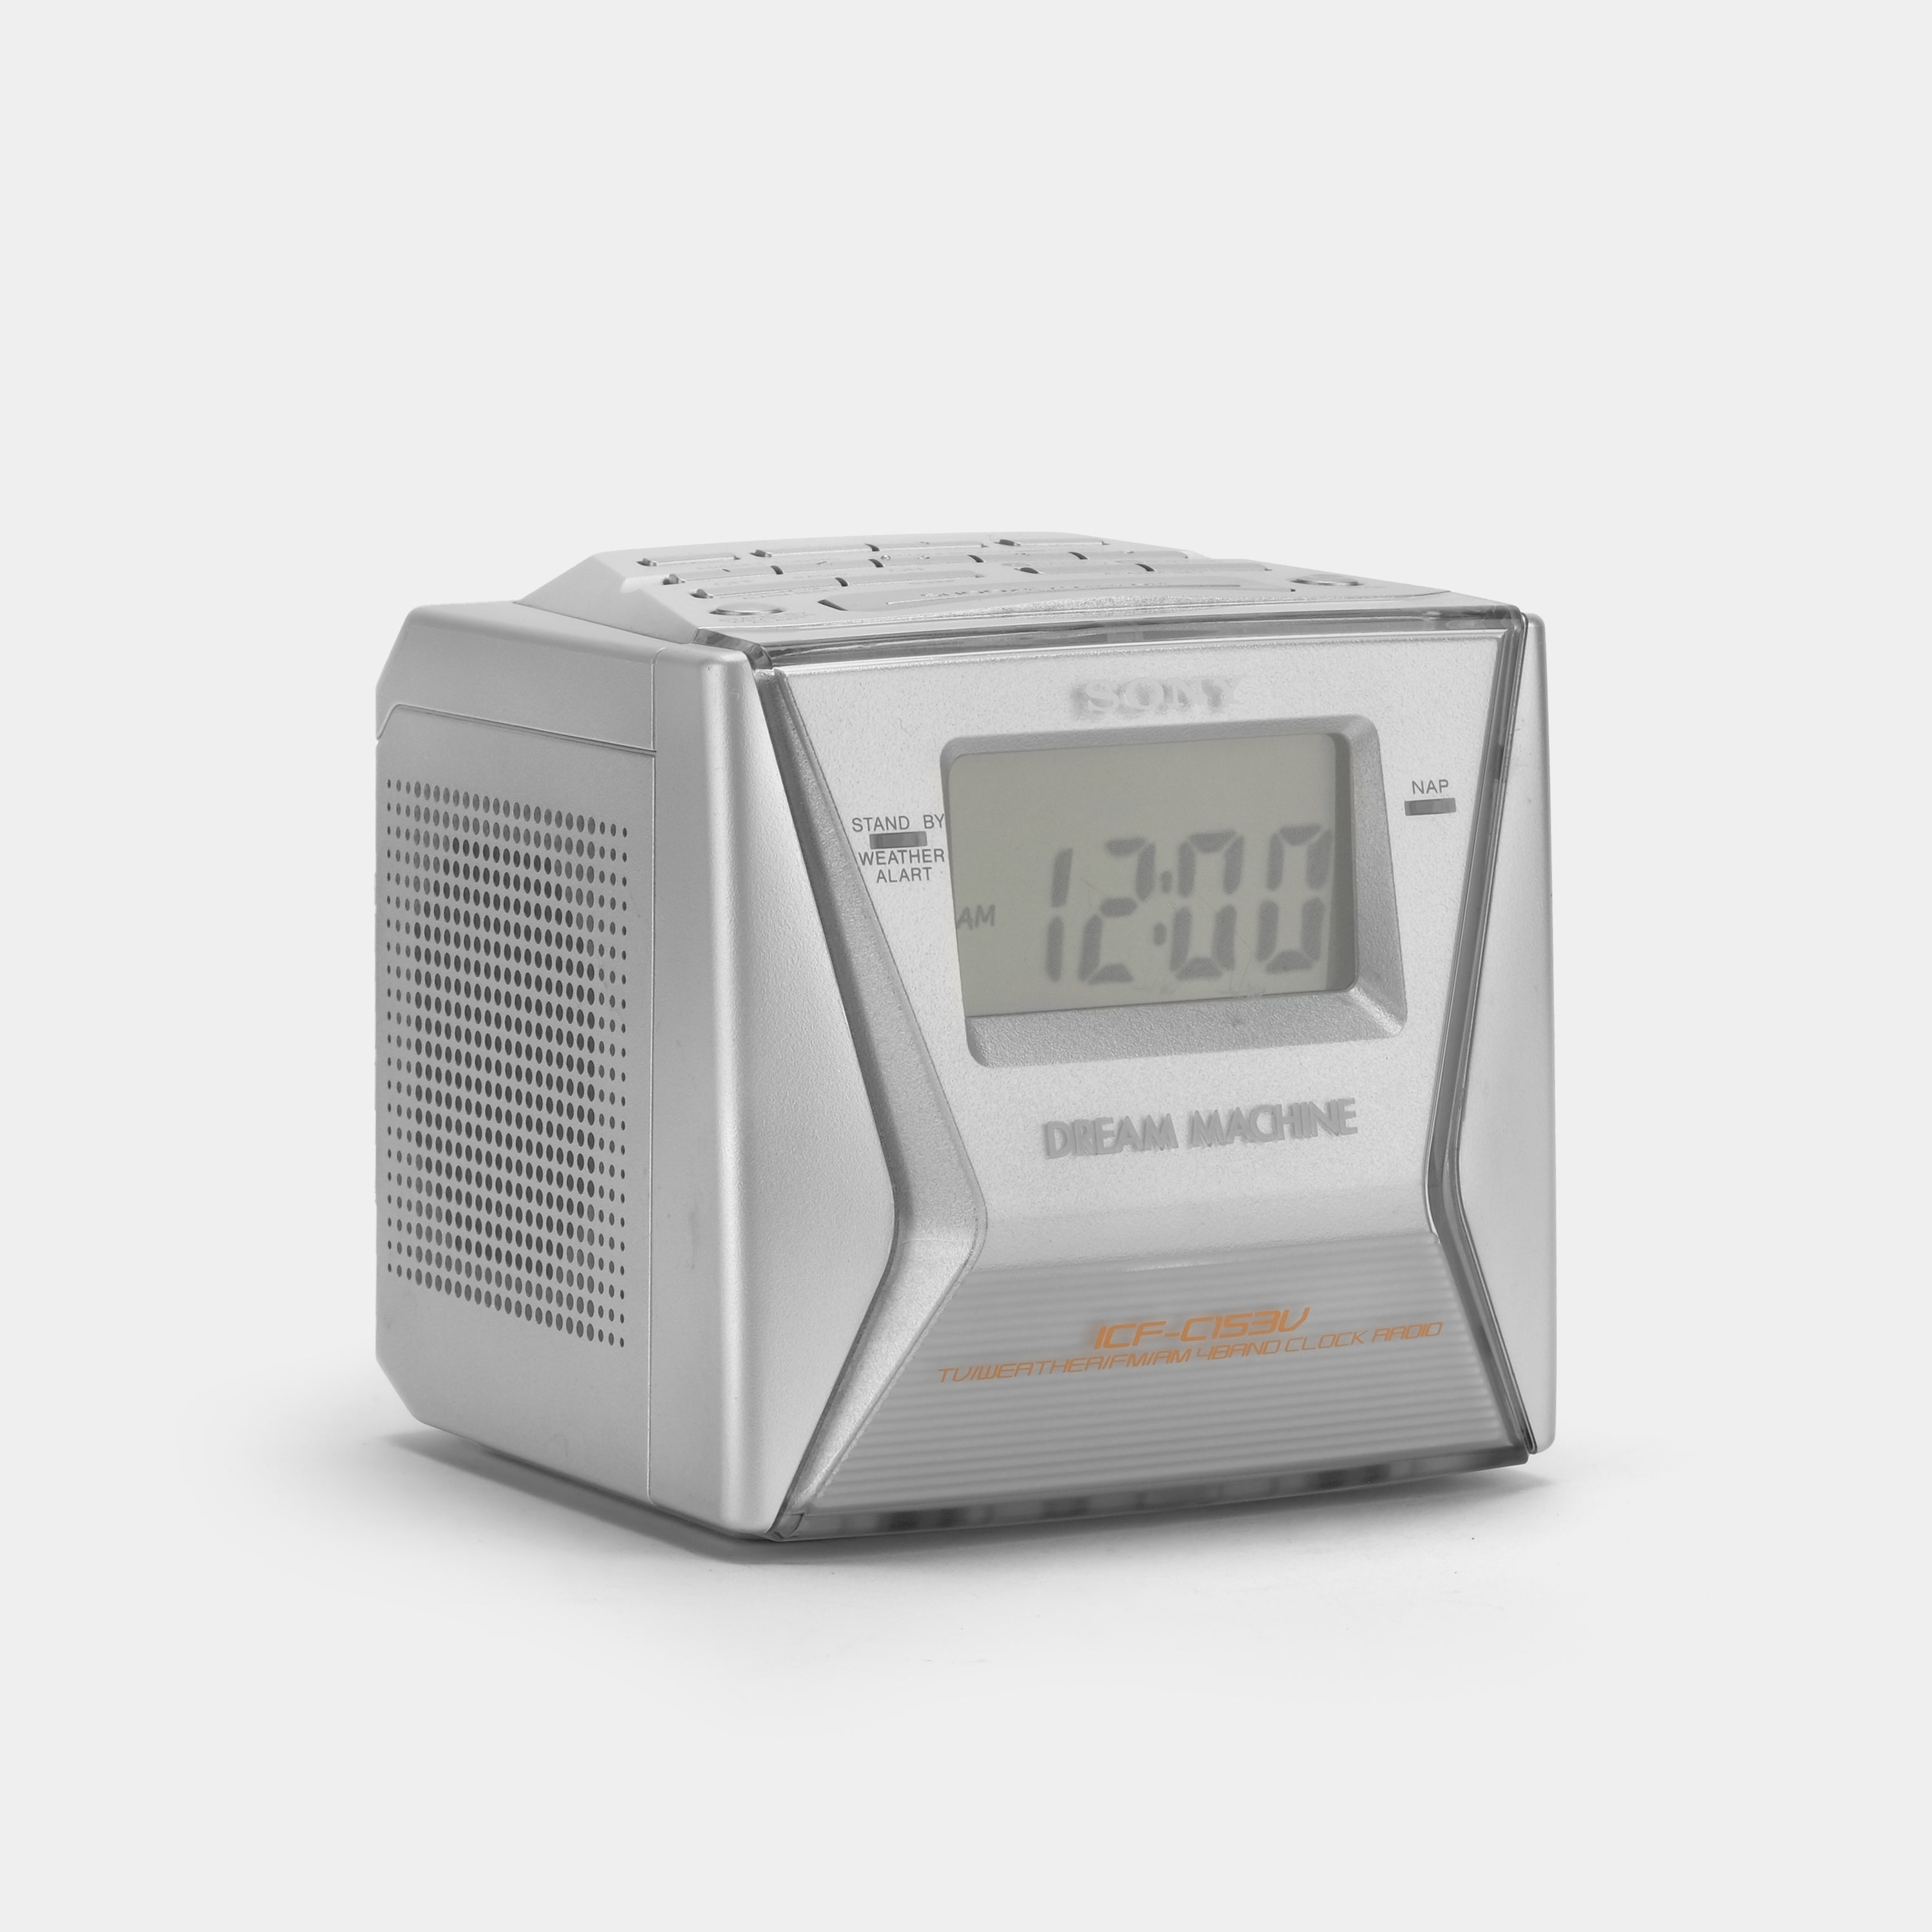 SONY Alarm Clock Radio AM/FM Dream Machine